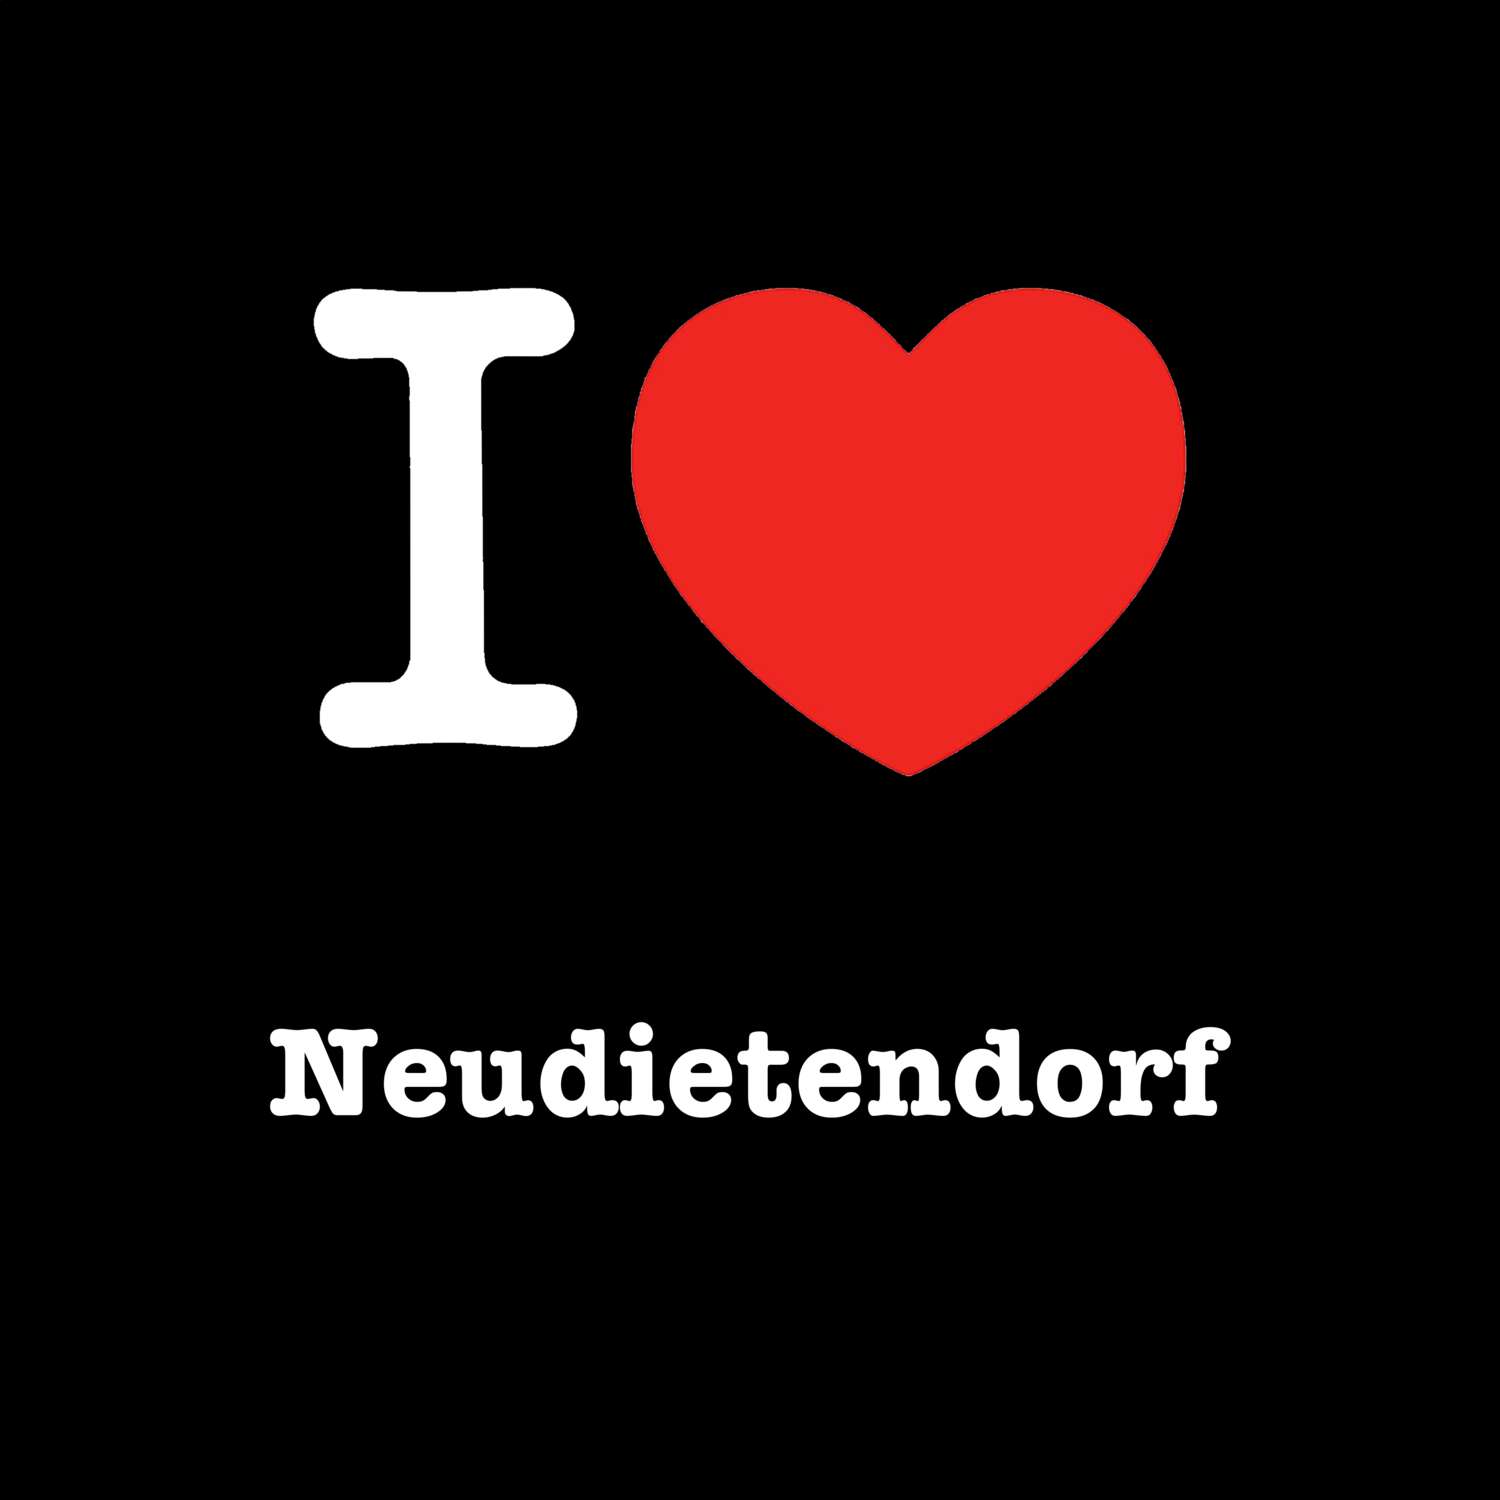 Neudietendorf T-Shirt »I love«